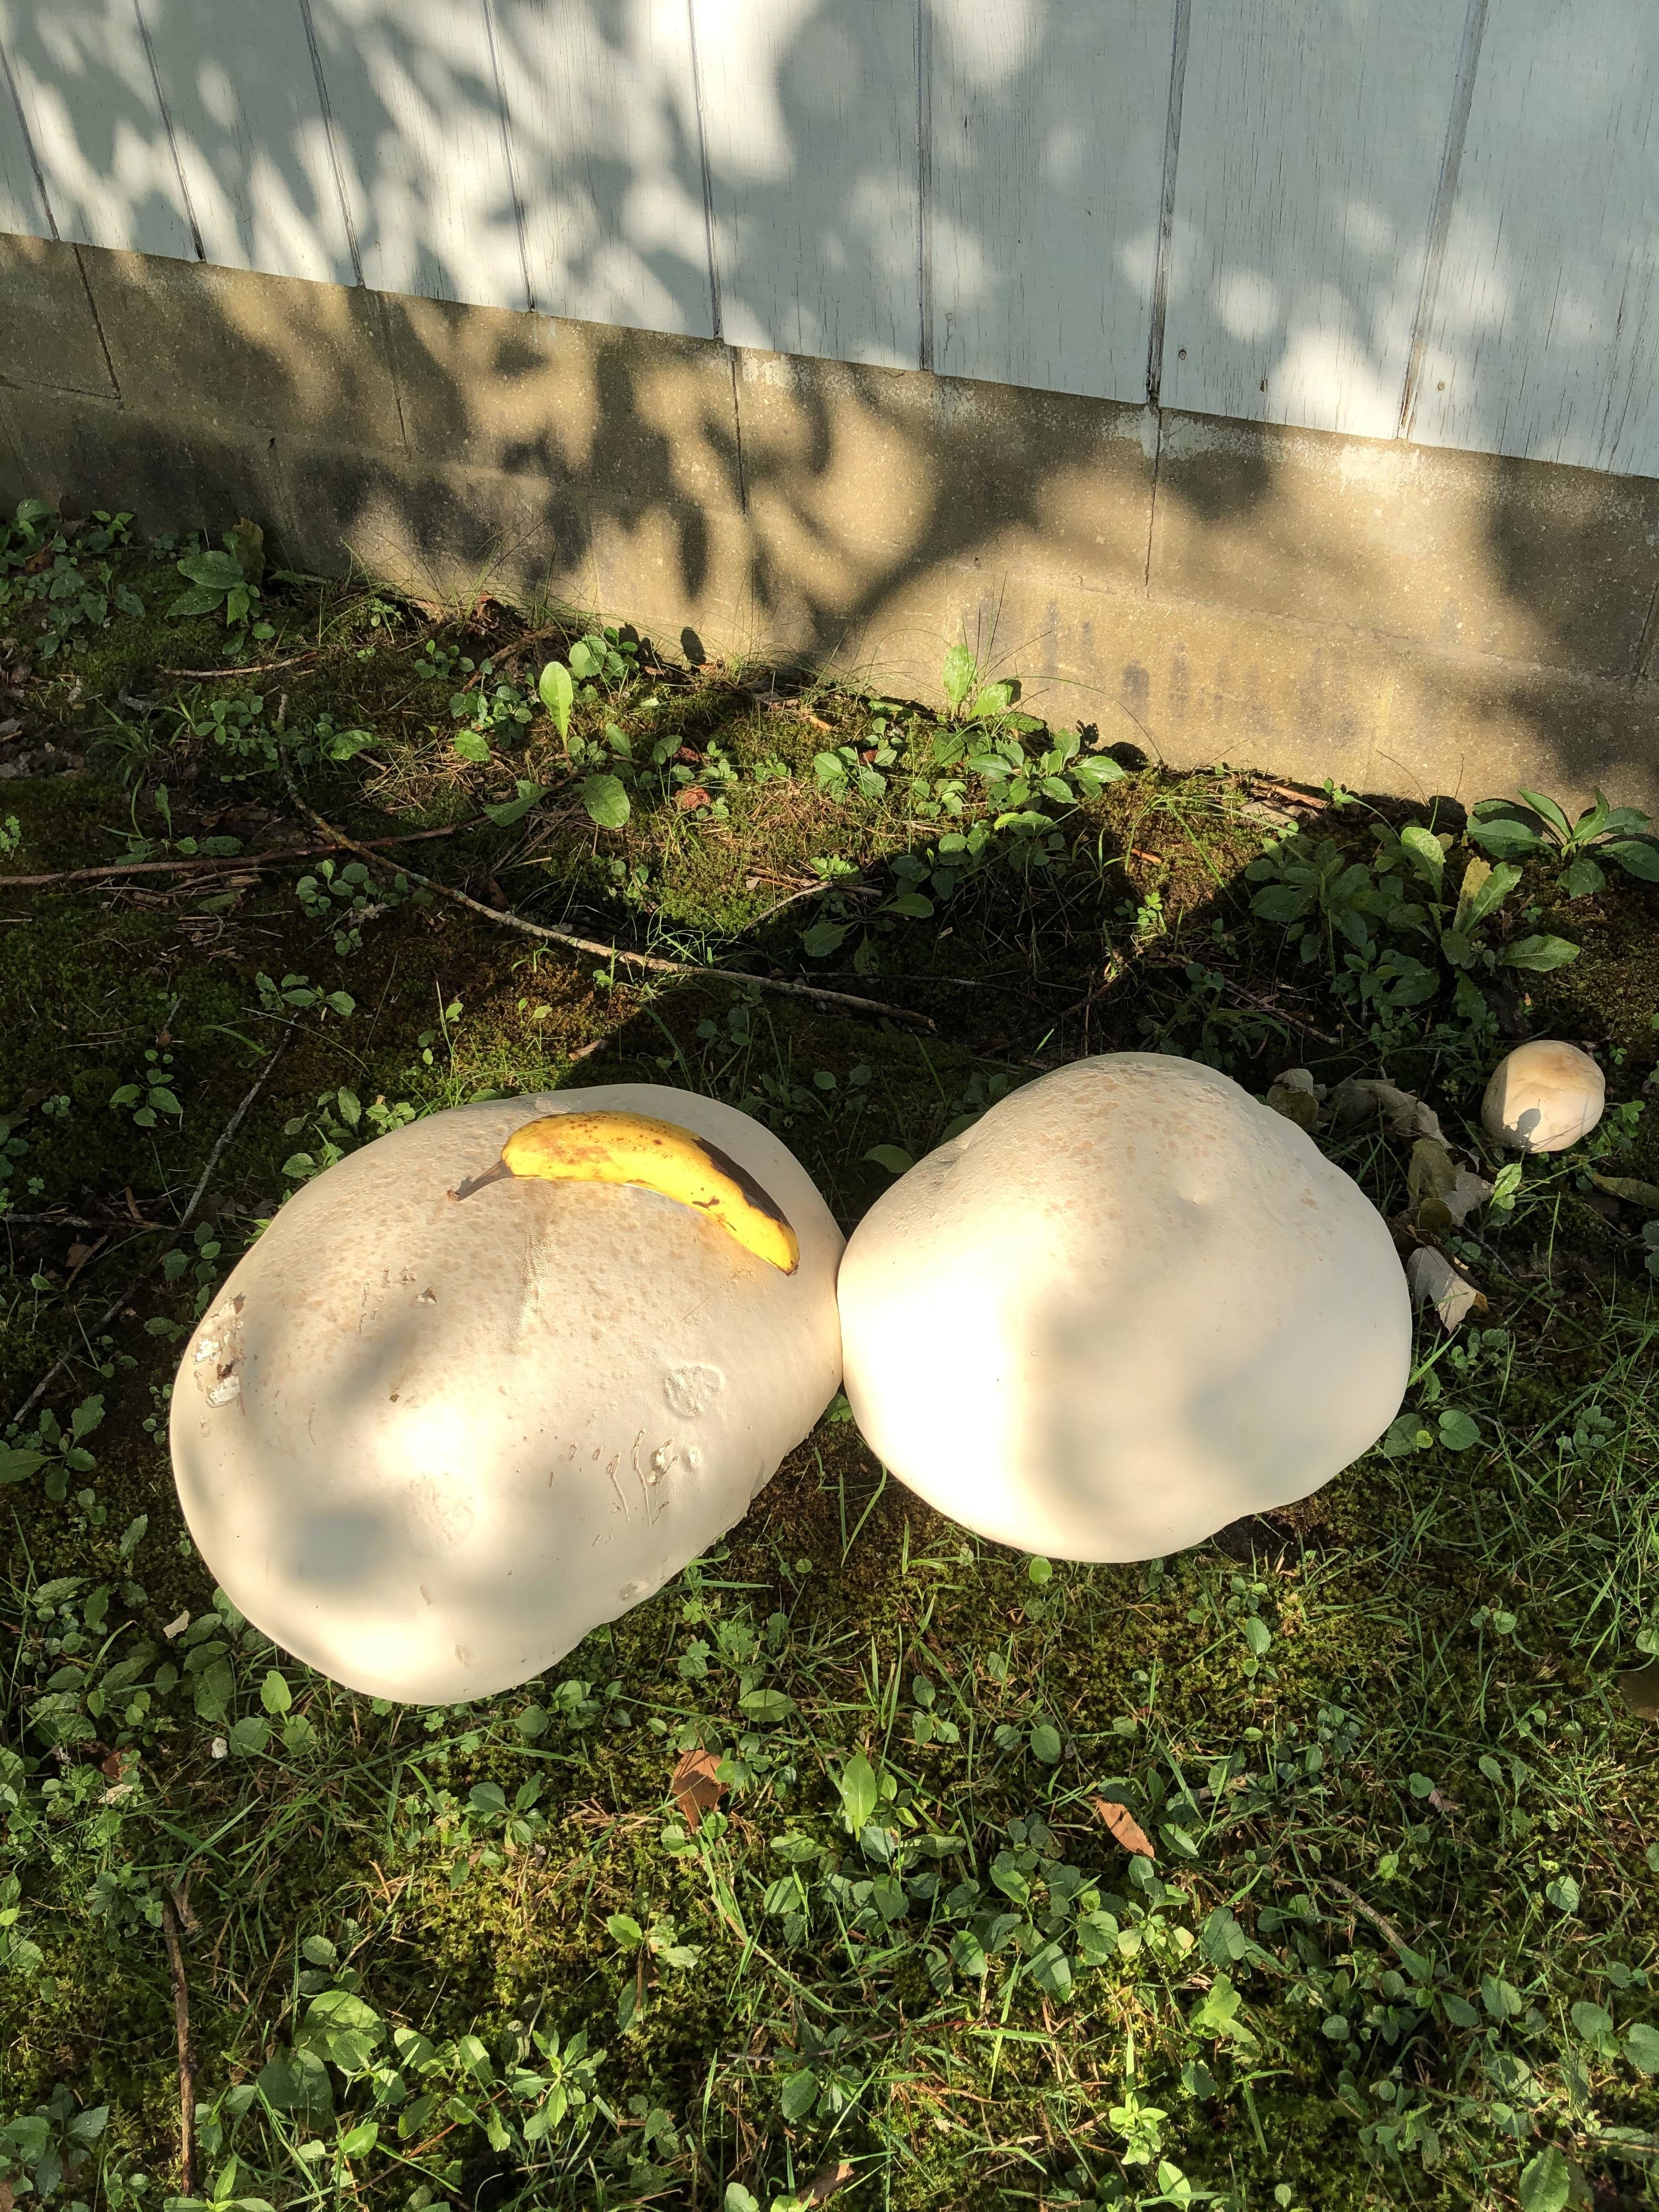 giant mushrooms